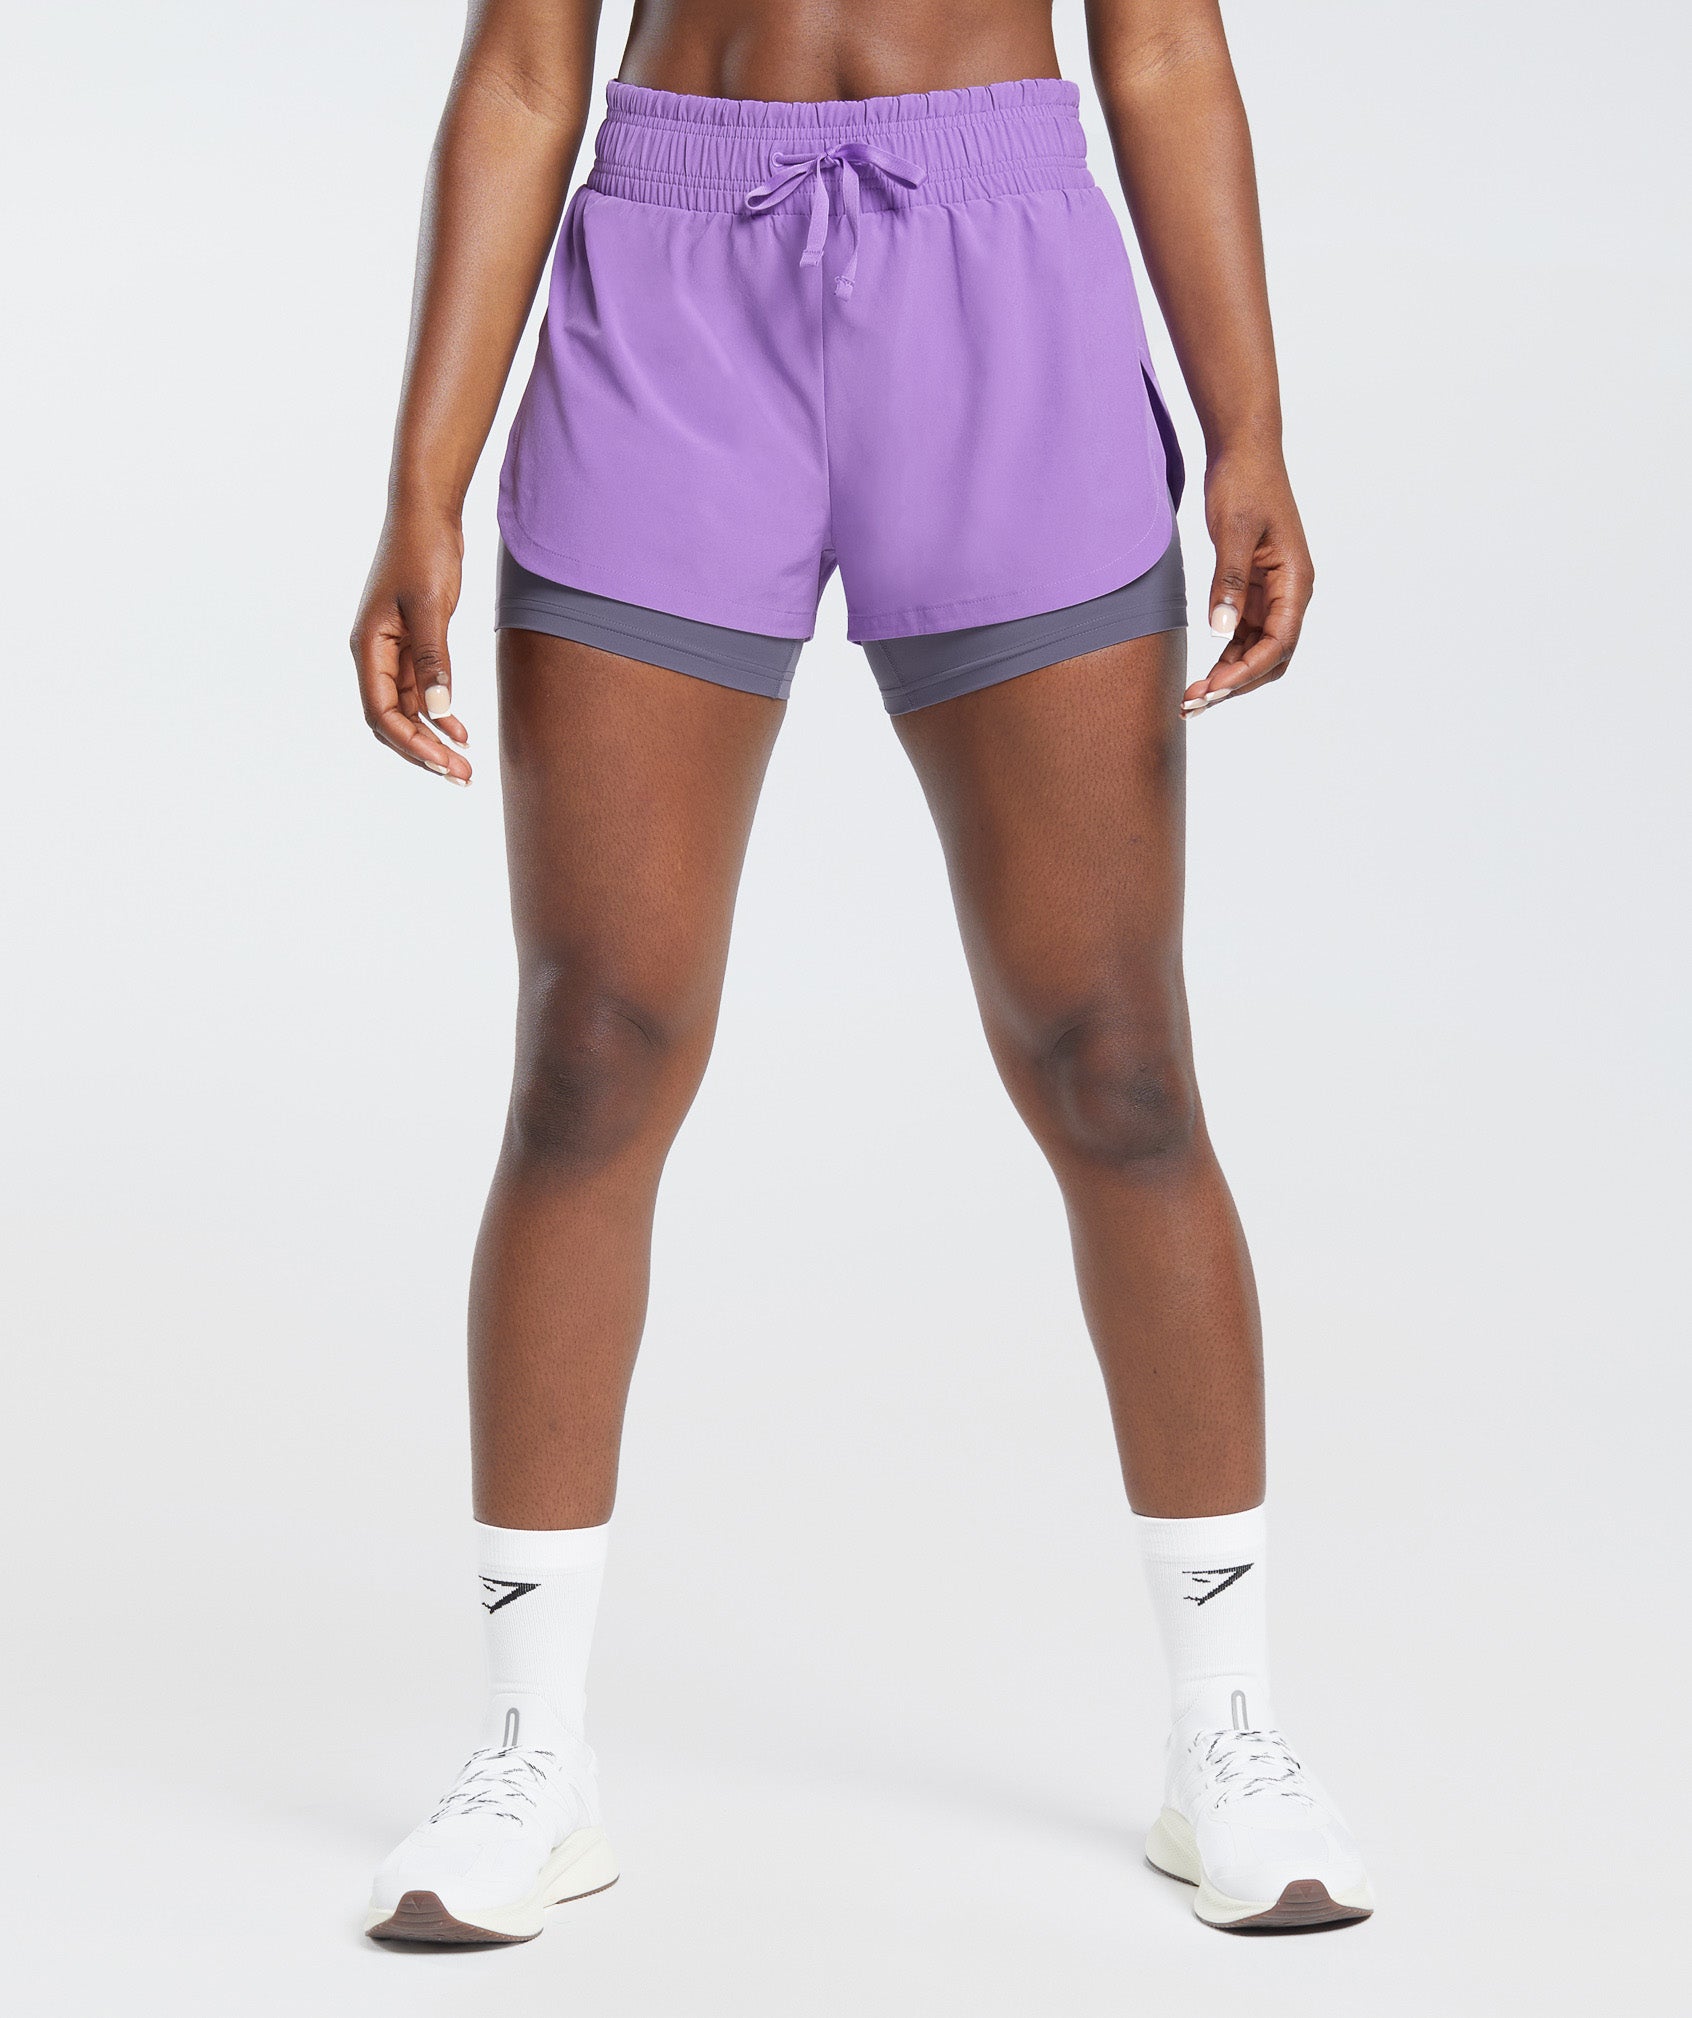 Gymshark Running 2 in 1 Shorts - Grape Purple/Dewberry Purple, Small